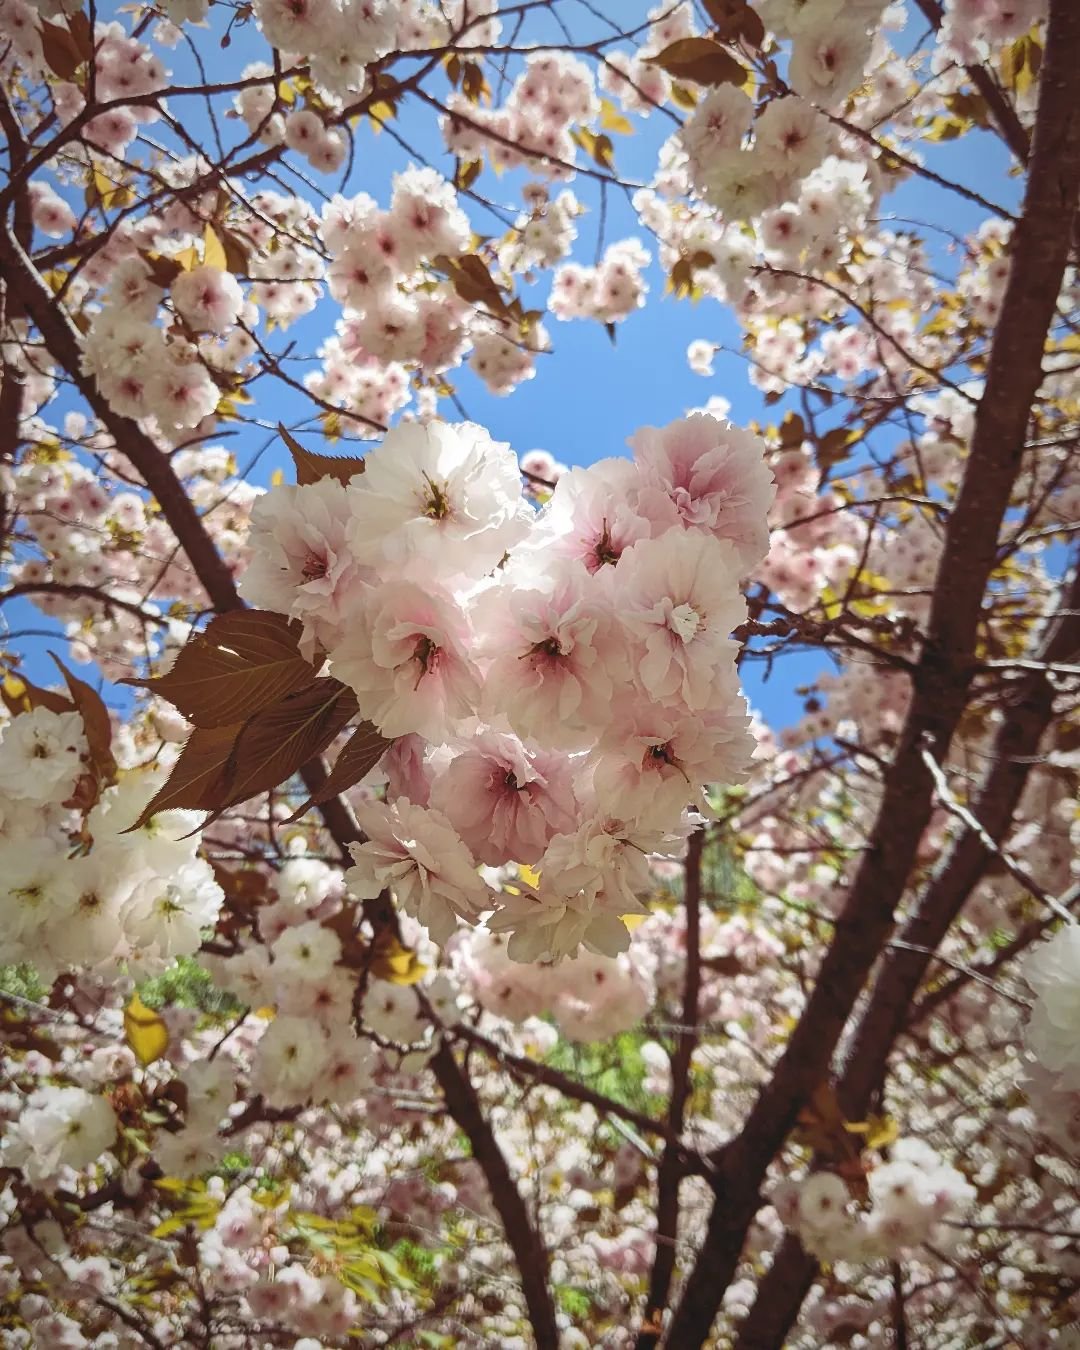 Last of the blossoms. I personally think that the mountain blossoms, known as 'yamazakura' in Japanese are more beautiful than the classic 'yoshino' cherry blossom. Thoughts?

#cherryblossom #sakura #yamazakura #桜 #山桜 #hanami #花見